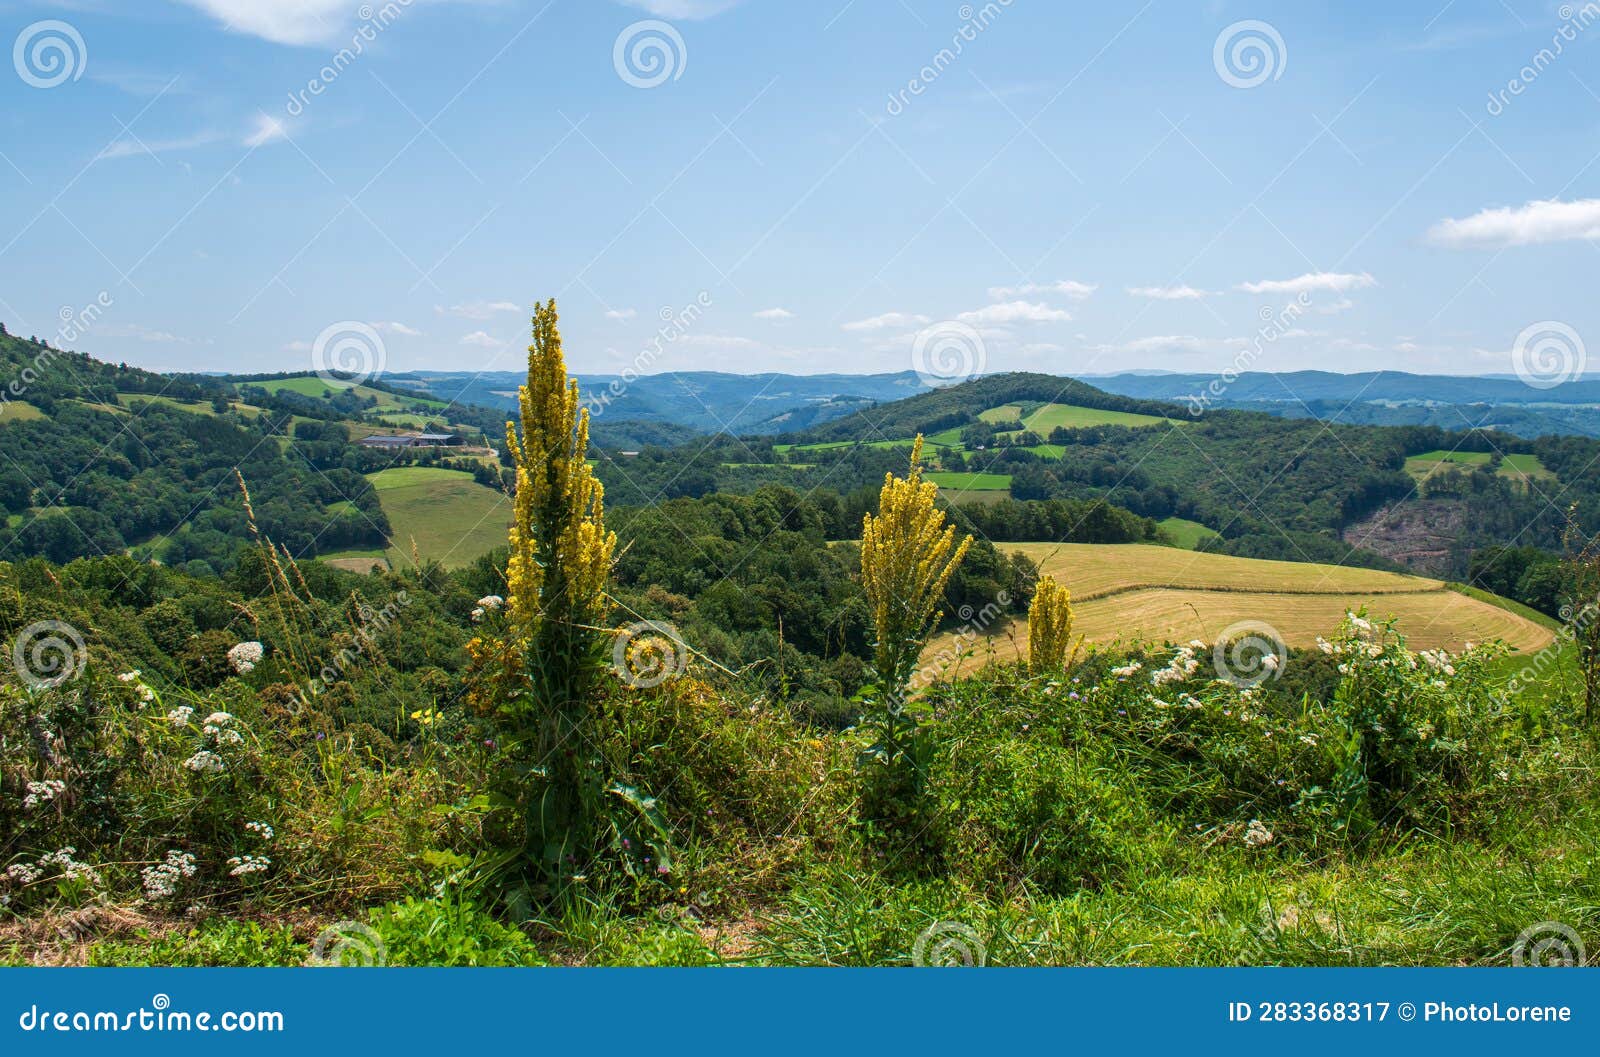 landscape of the aubrac plateau, aveyron, france